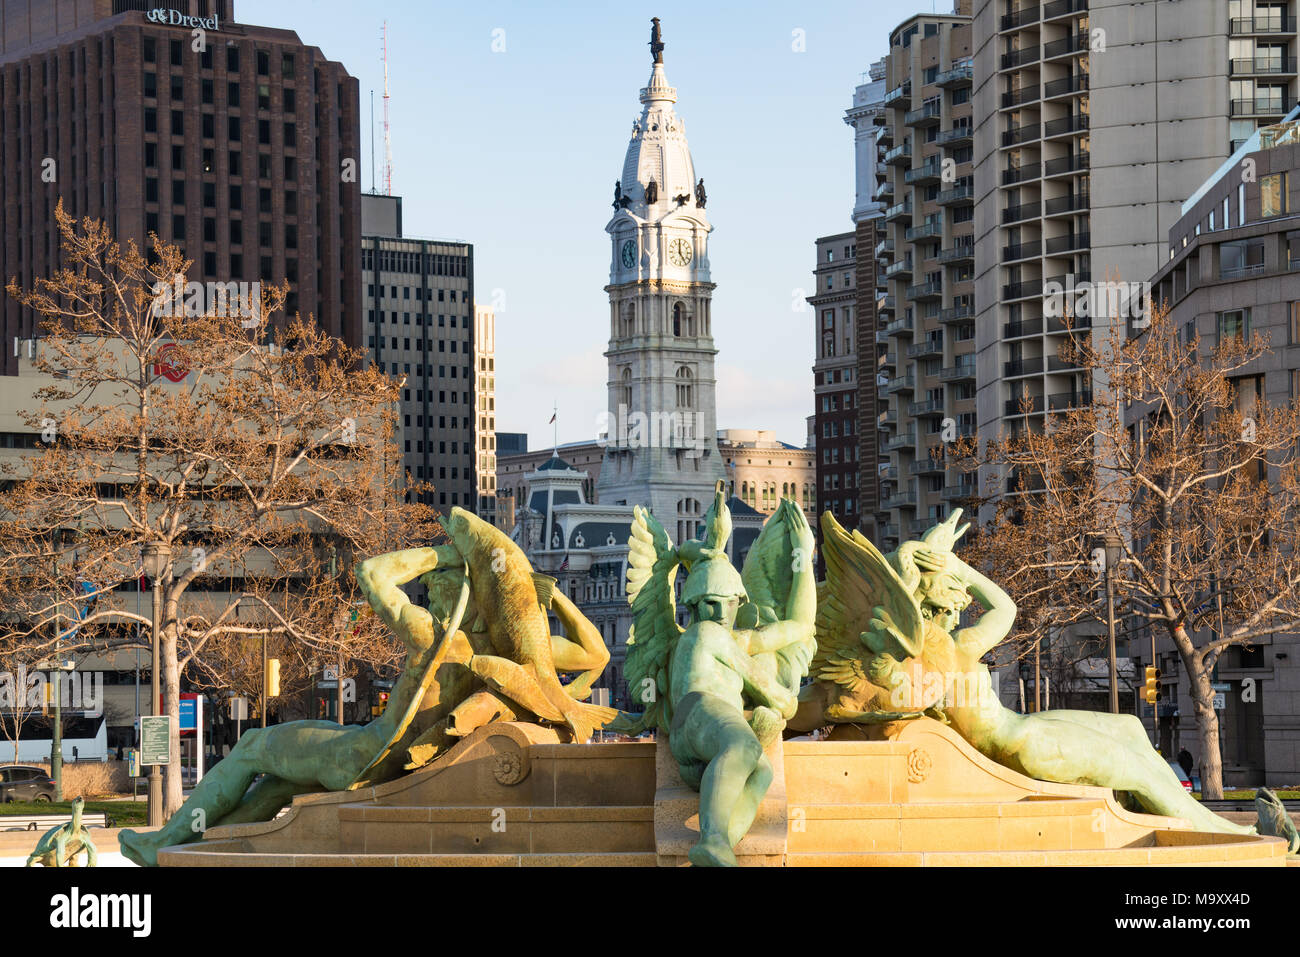 PHILADELPHIA, PA - 10. MÄRZ 2018: Historisches Rathaus Gebäude in der Innenstadt von Philadelphia, Pennsylvania Stockfoto